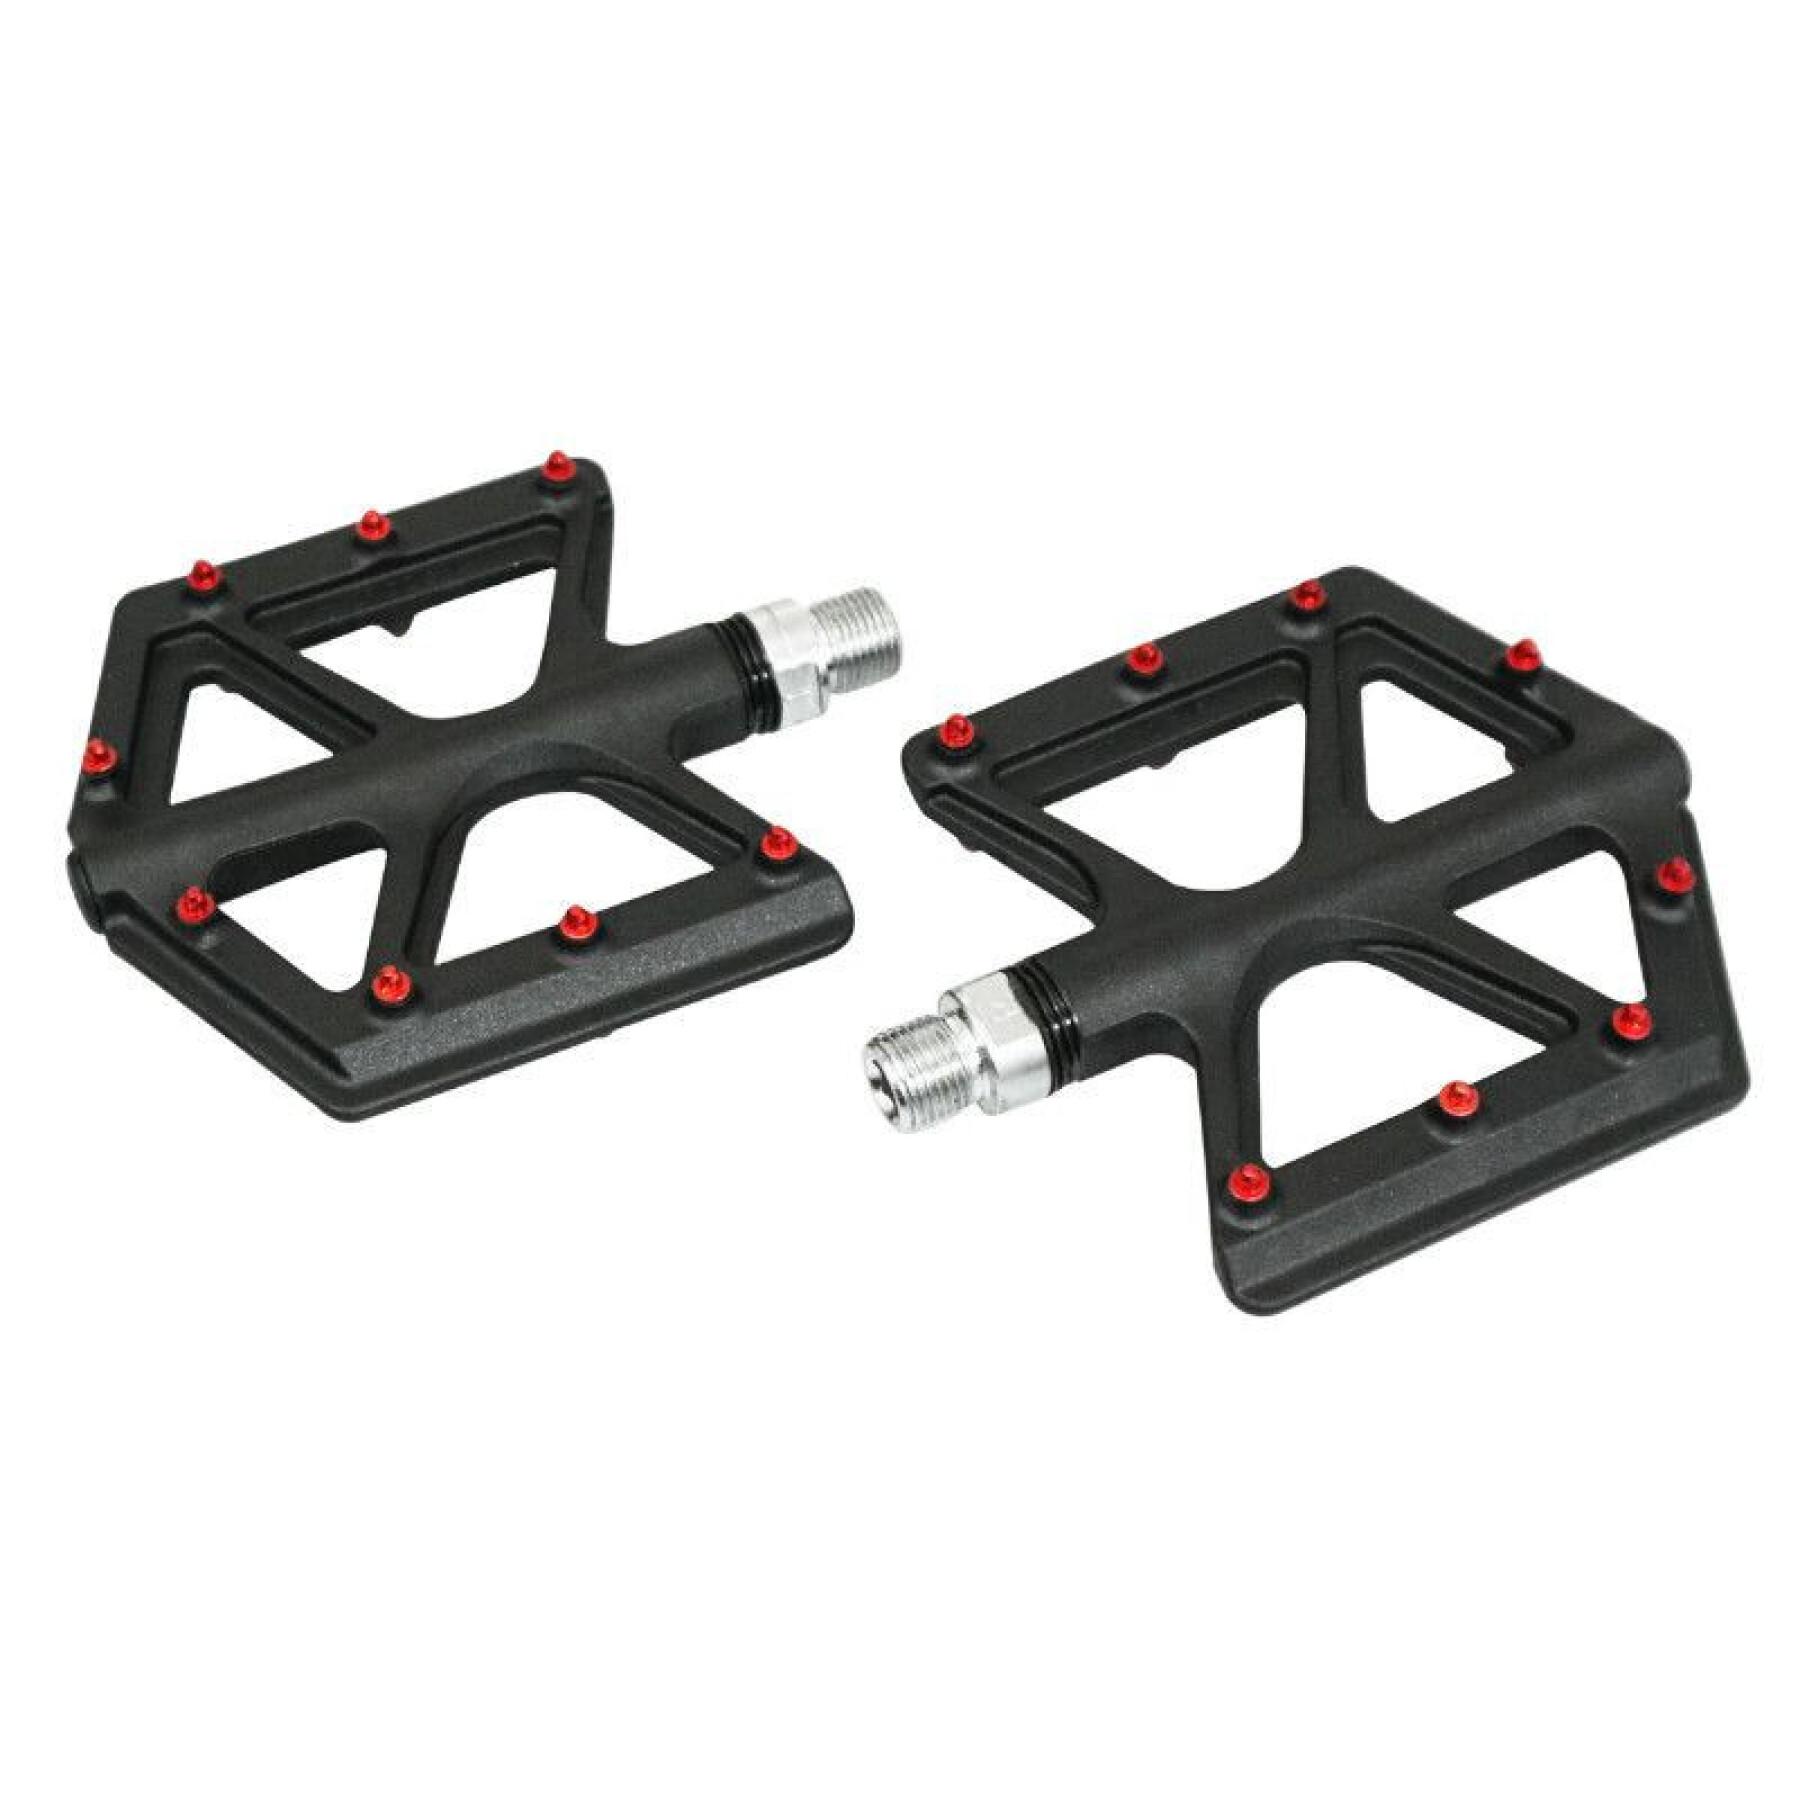 Pedals bmx-vtt downhill alu carbon fiber threading 9-16 with red pins P2R